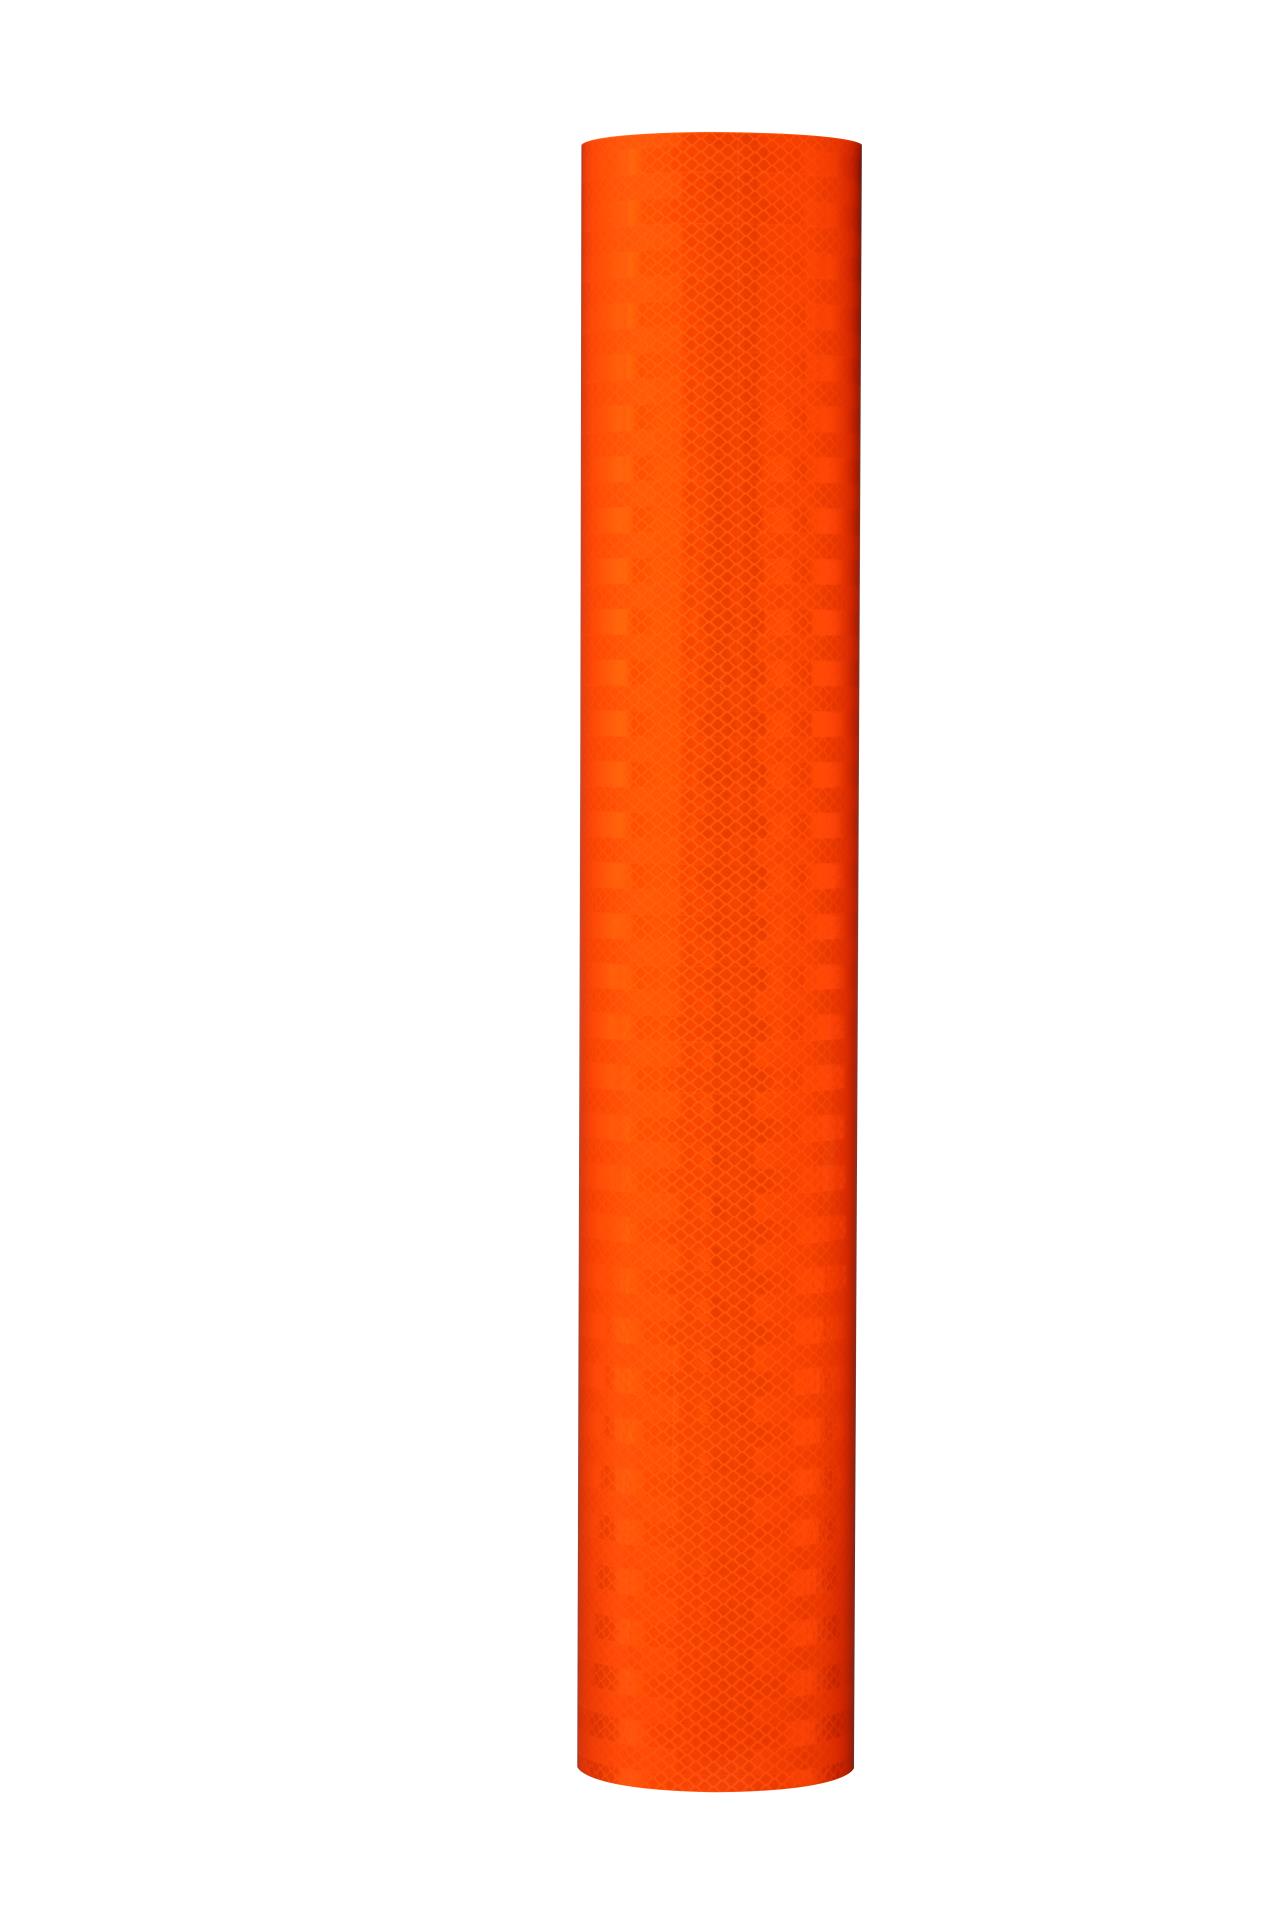 3M 3930 3" x 4"  Orange Prismatic Reflective Stick On Tape Trailer Truck 4 